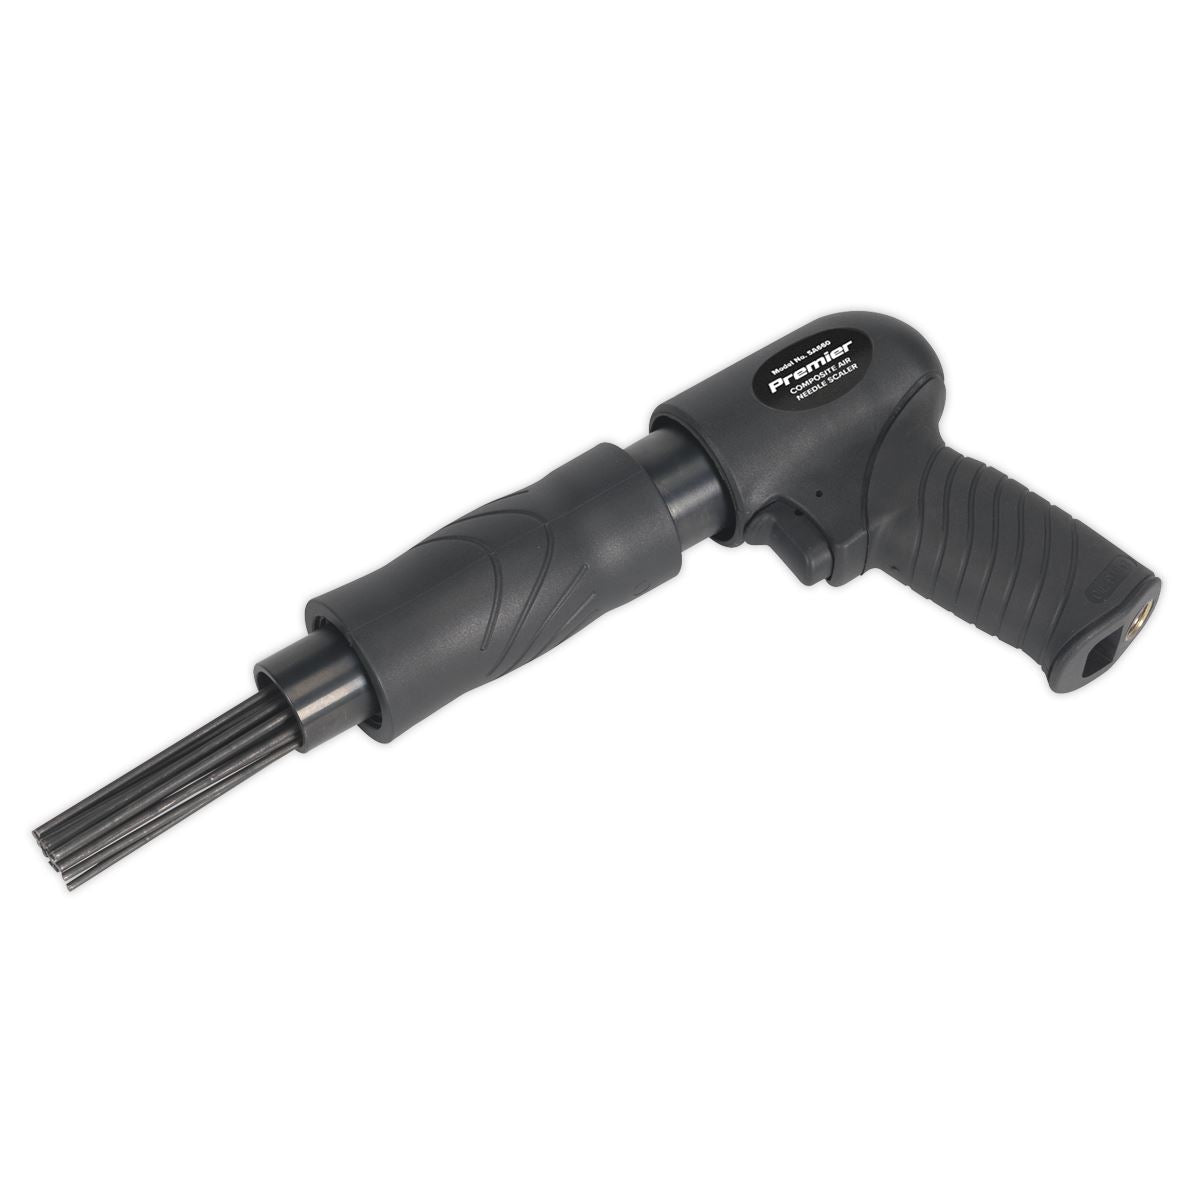 Sealey Premier Air Needle Scaler Composite Pistol Type